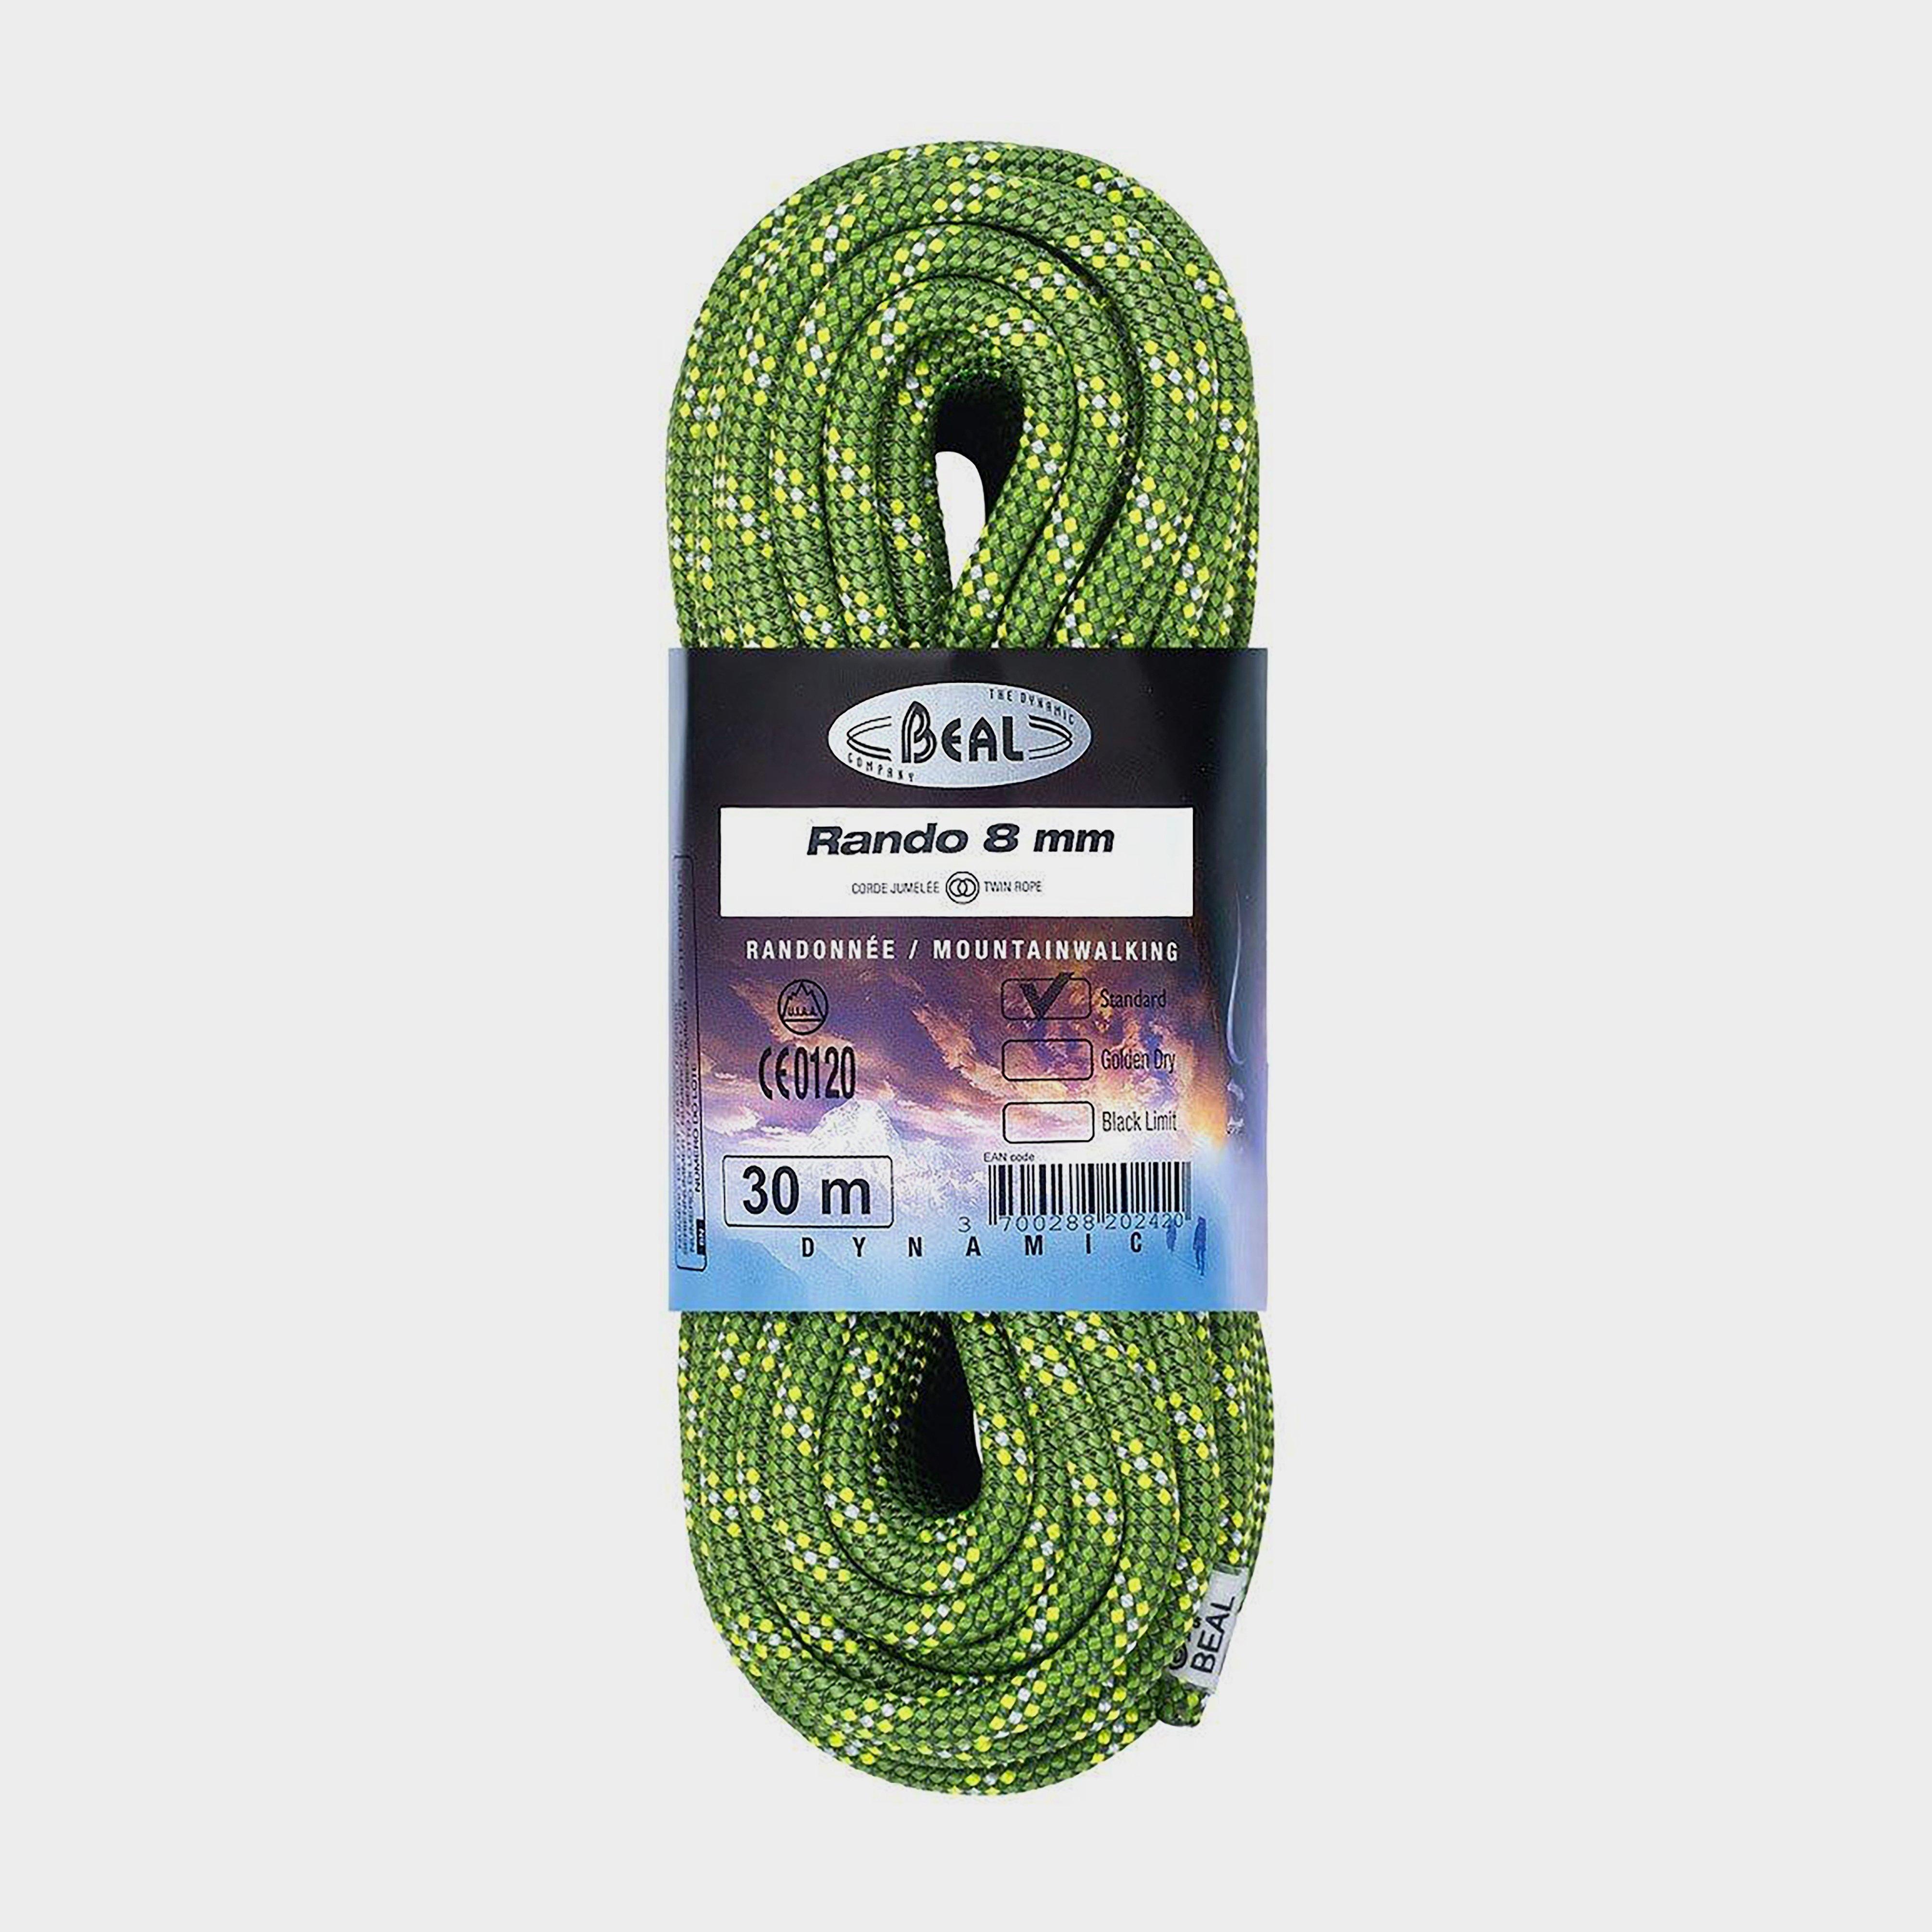 Beal Beal Rando 8Mm Walkers Rope (30M) - Green, Green